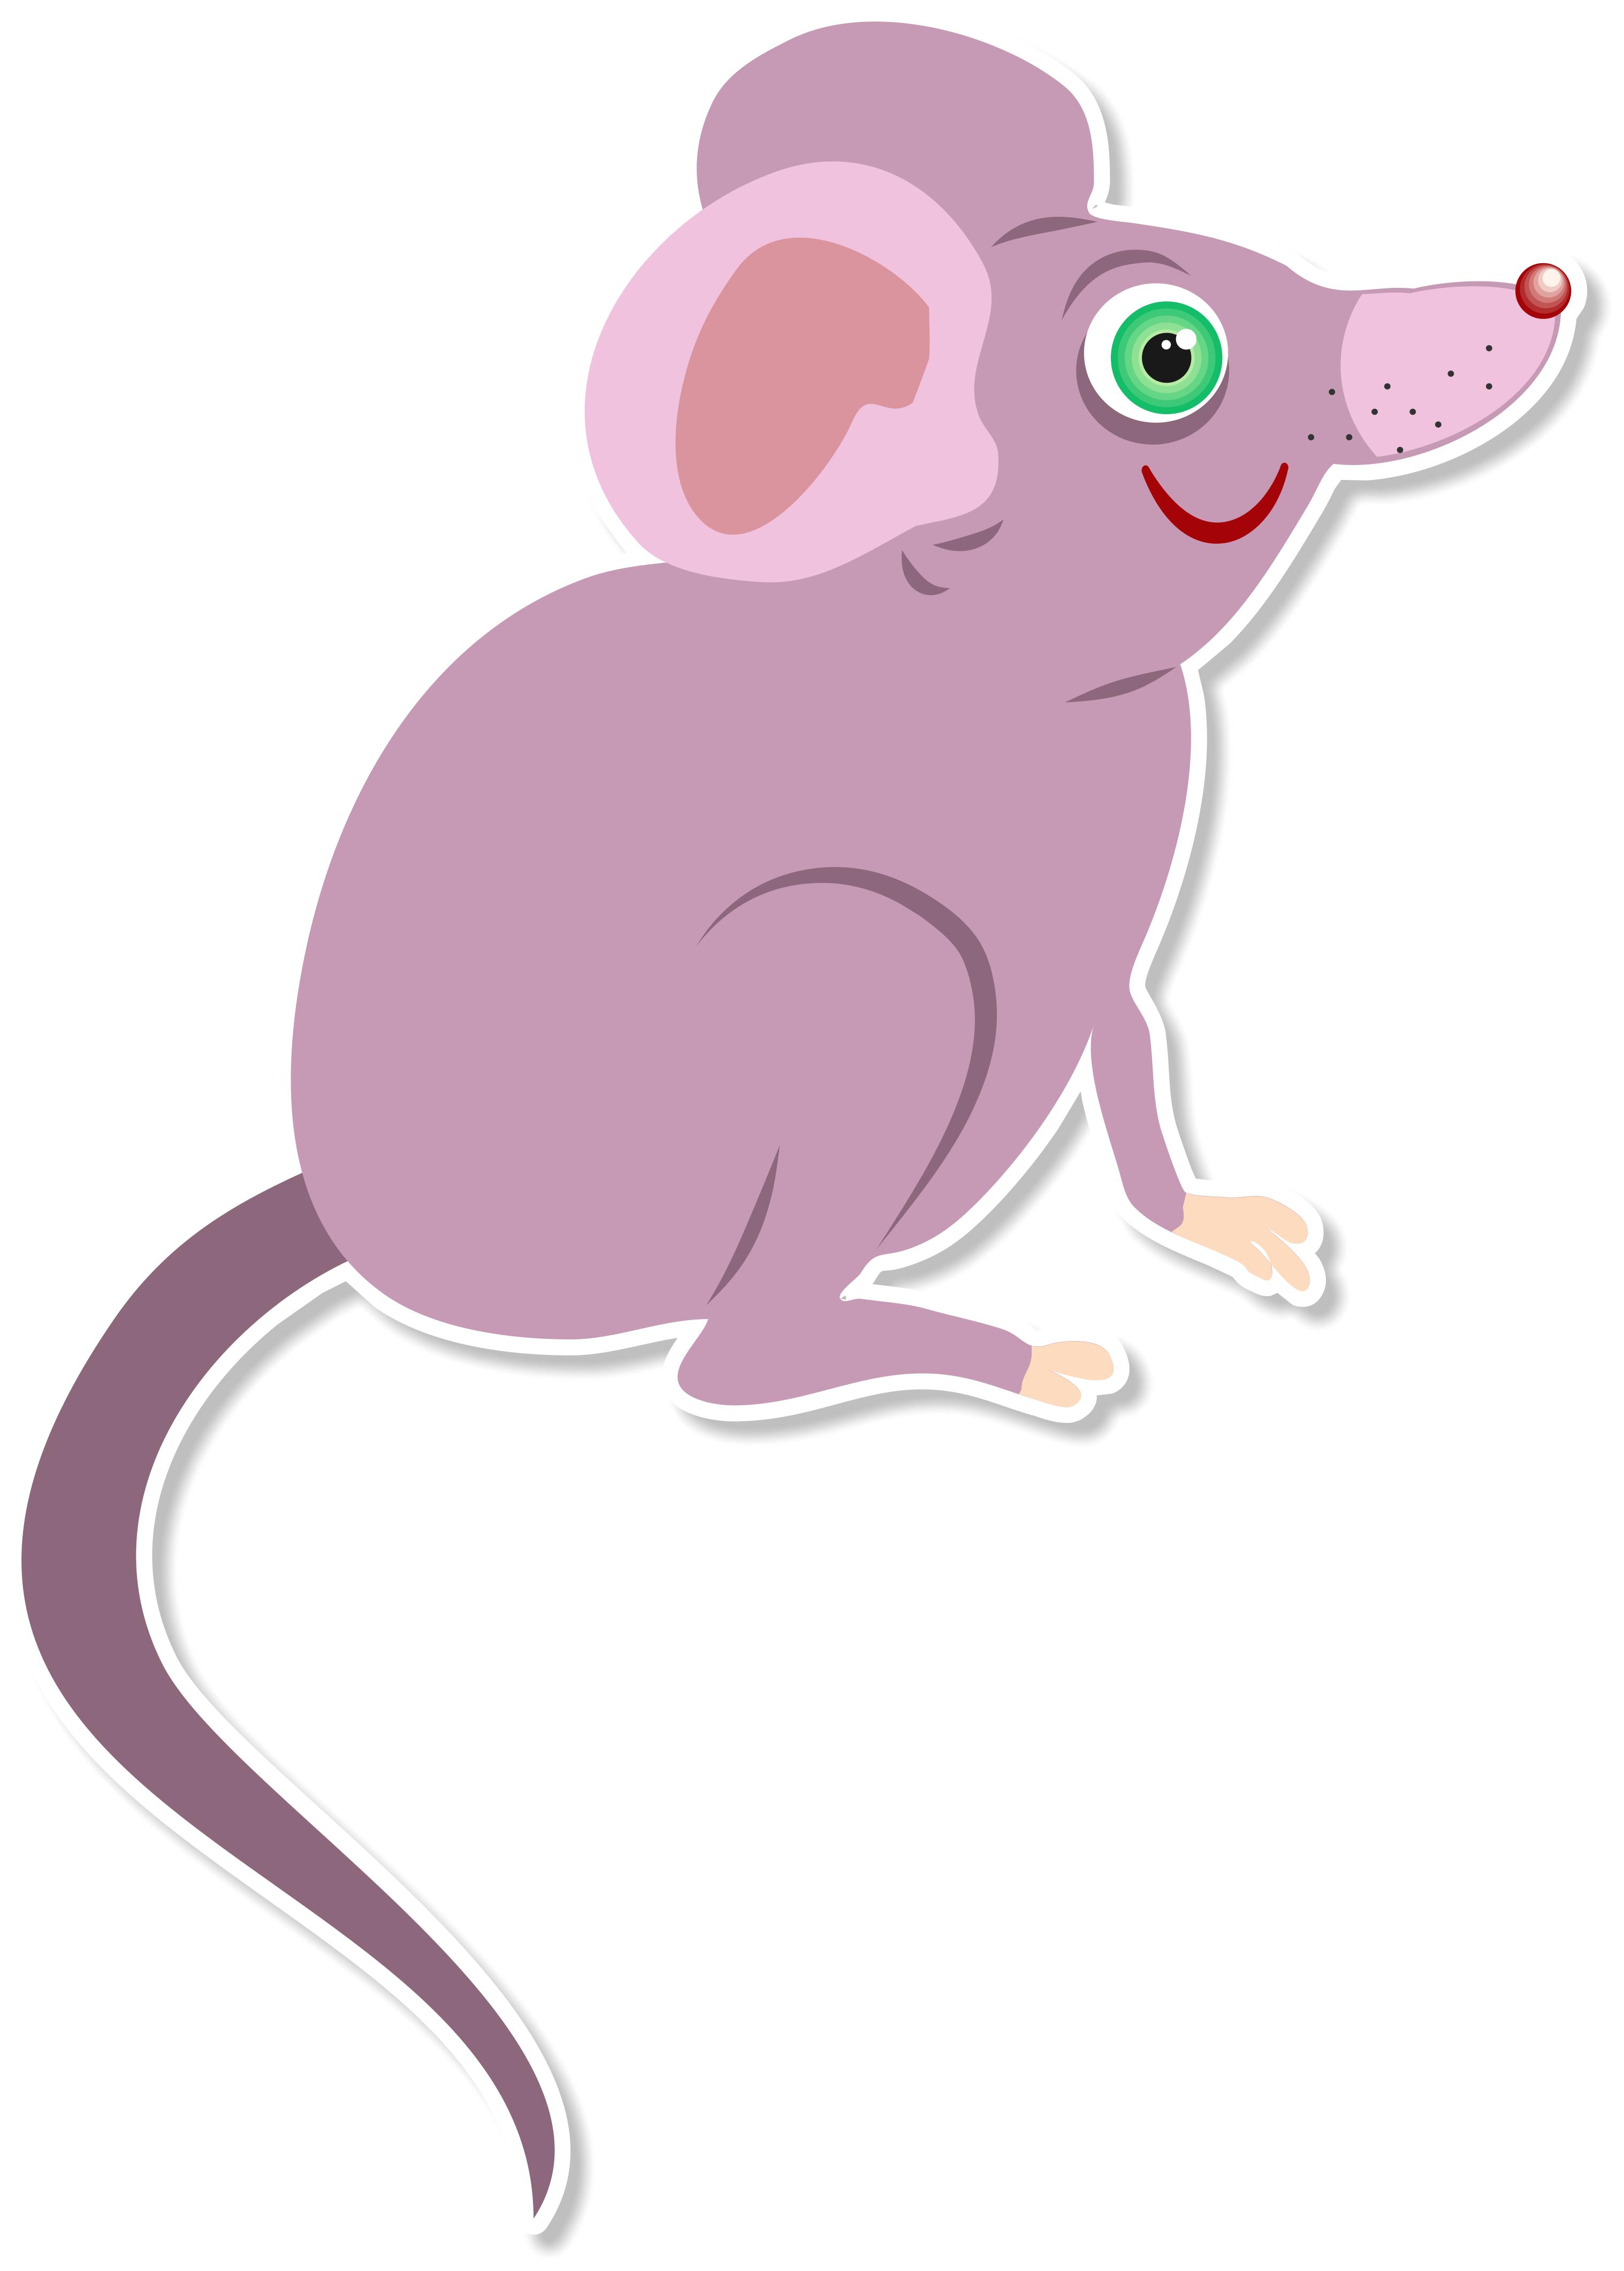 Cartoon Mouse | Free Images at Clker.com - vector clip art online